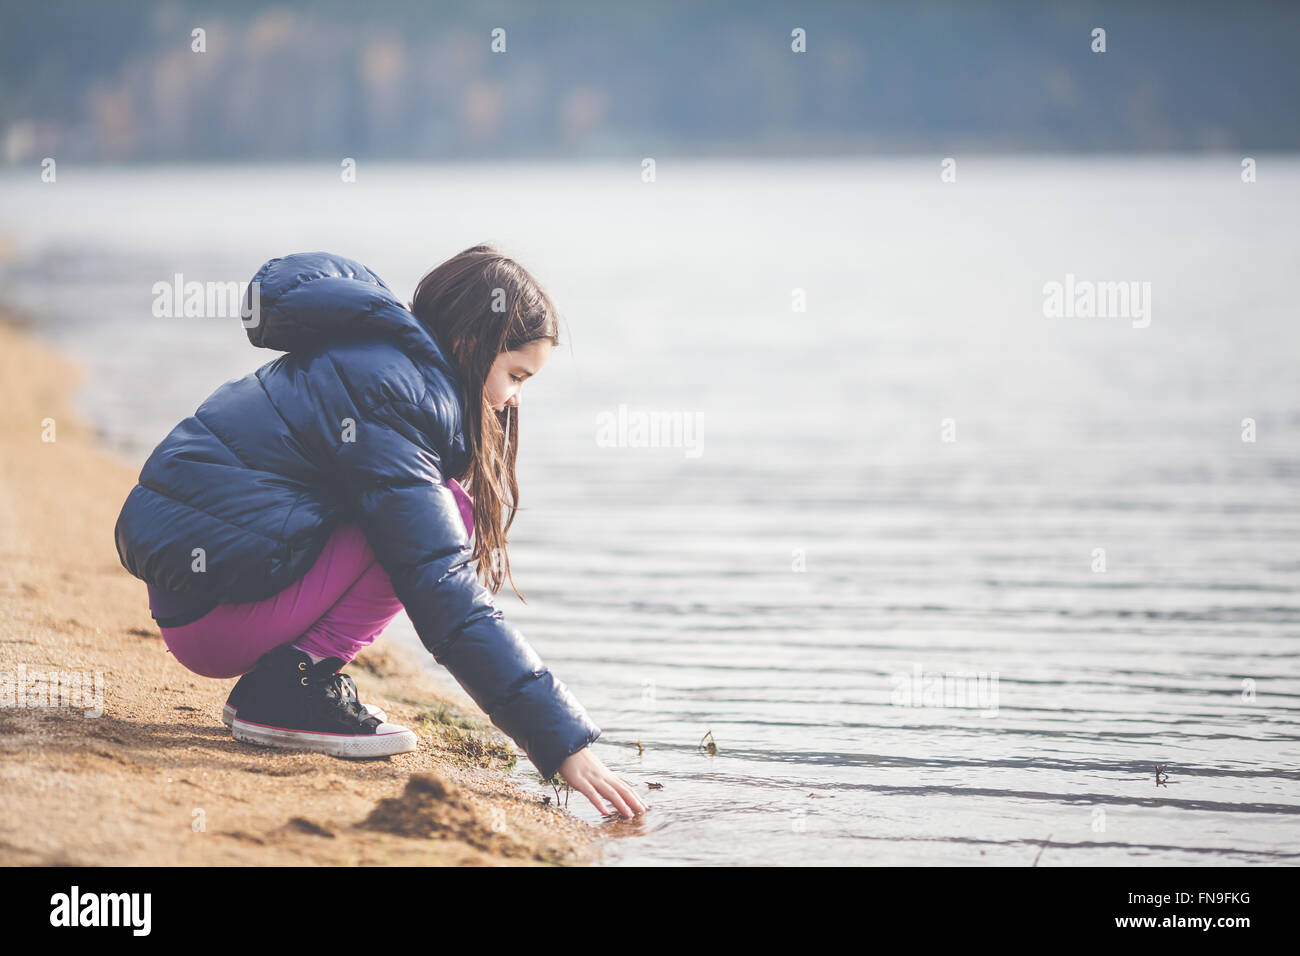 Girl crouching by a lake Stock Photo